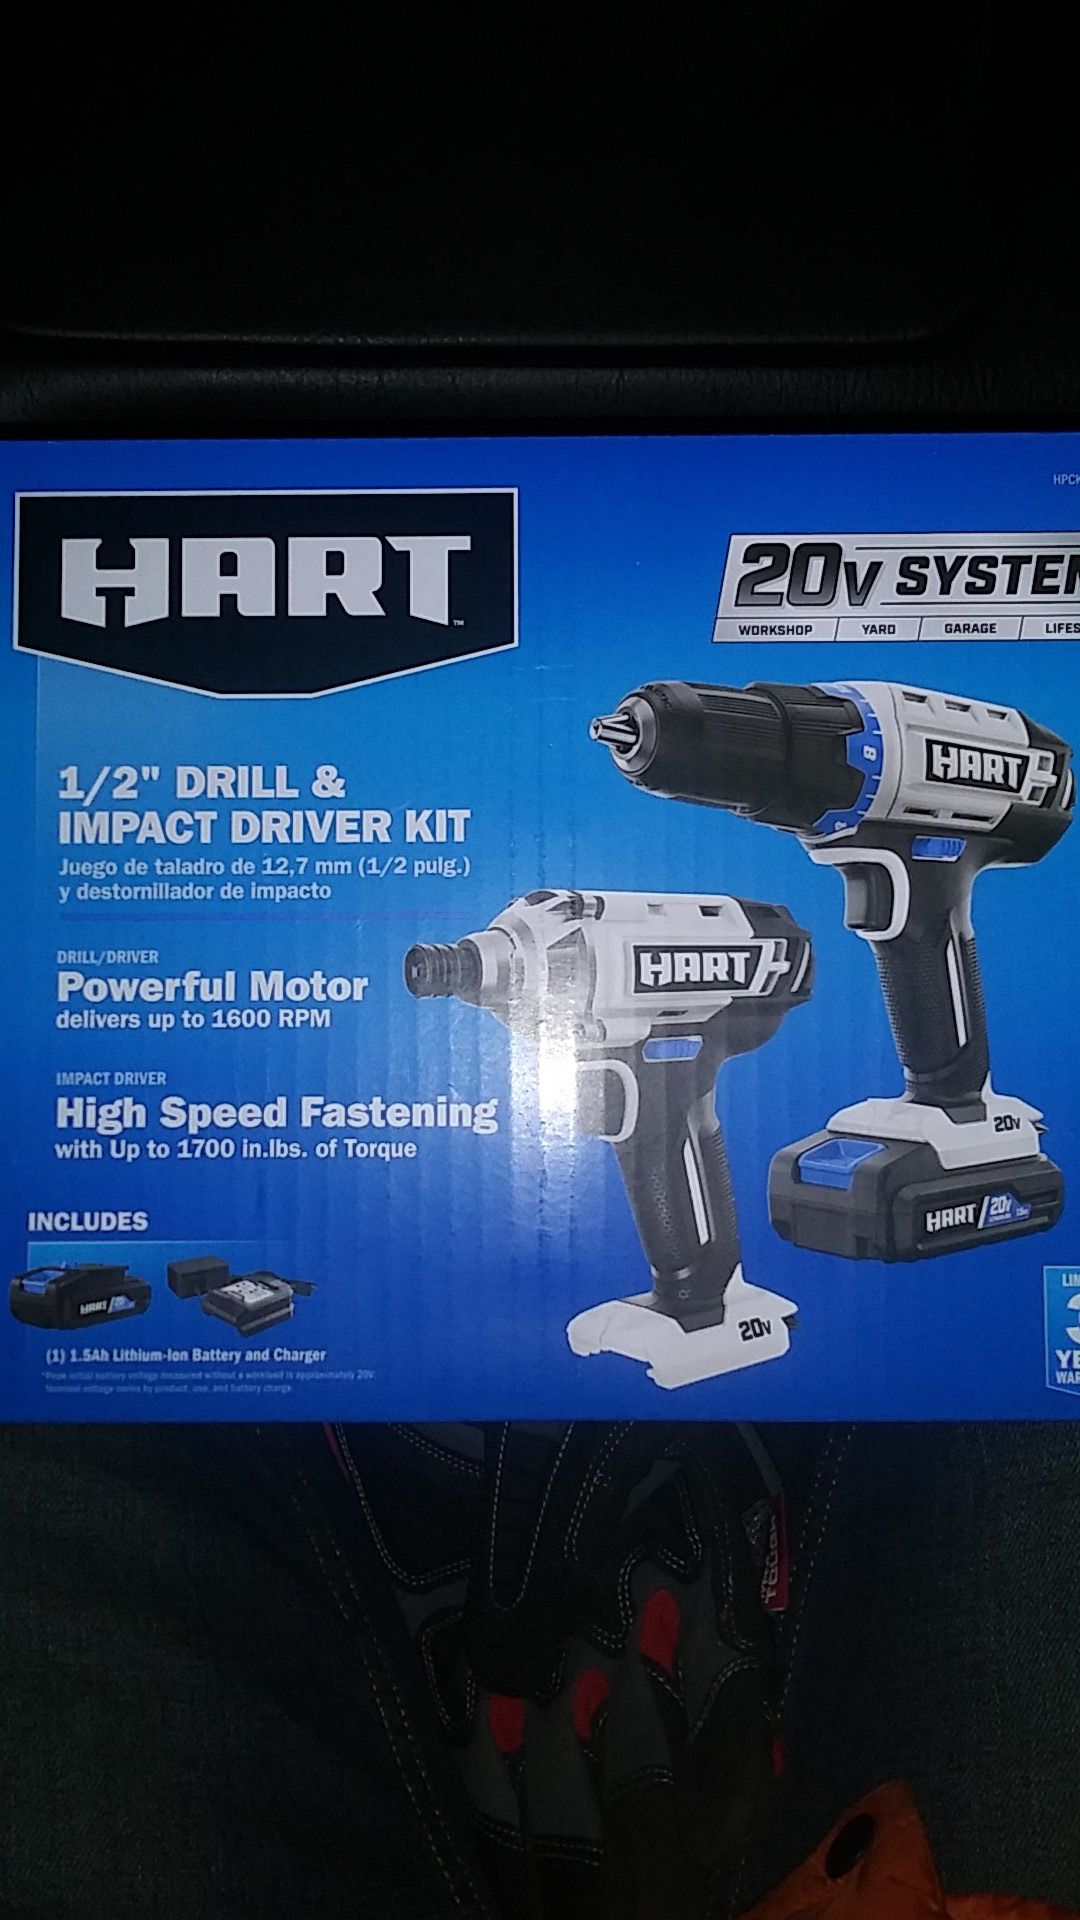 20v Hart 1/2" Drill & Impact Driver Kit